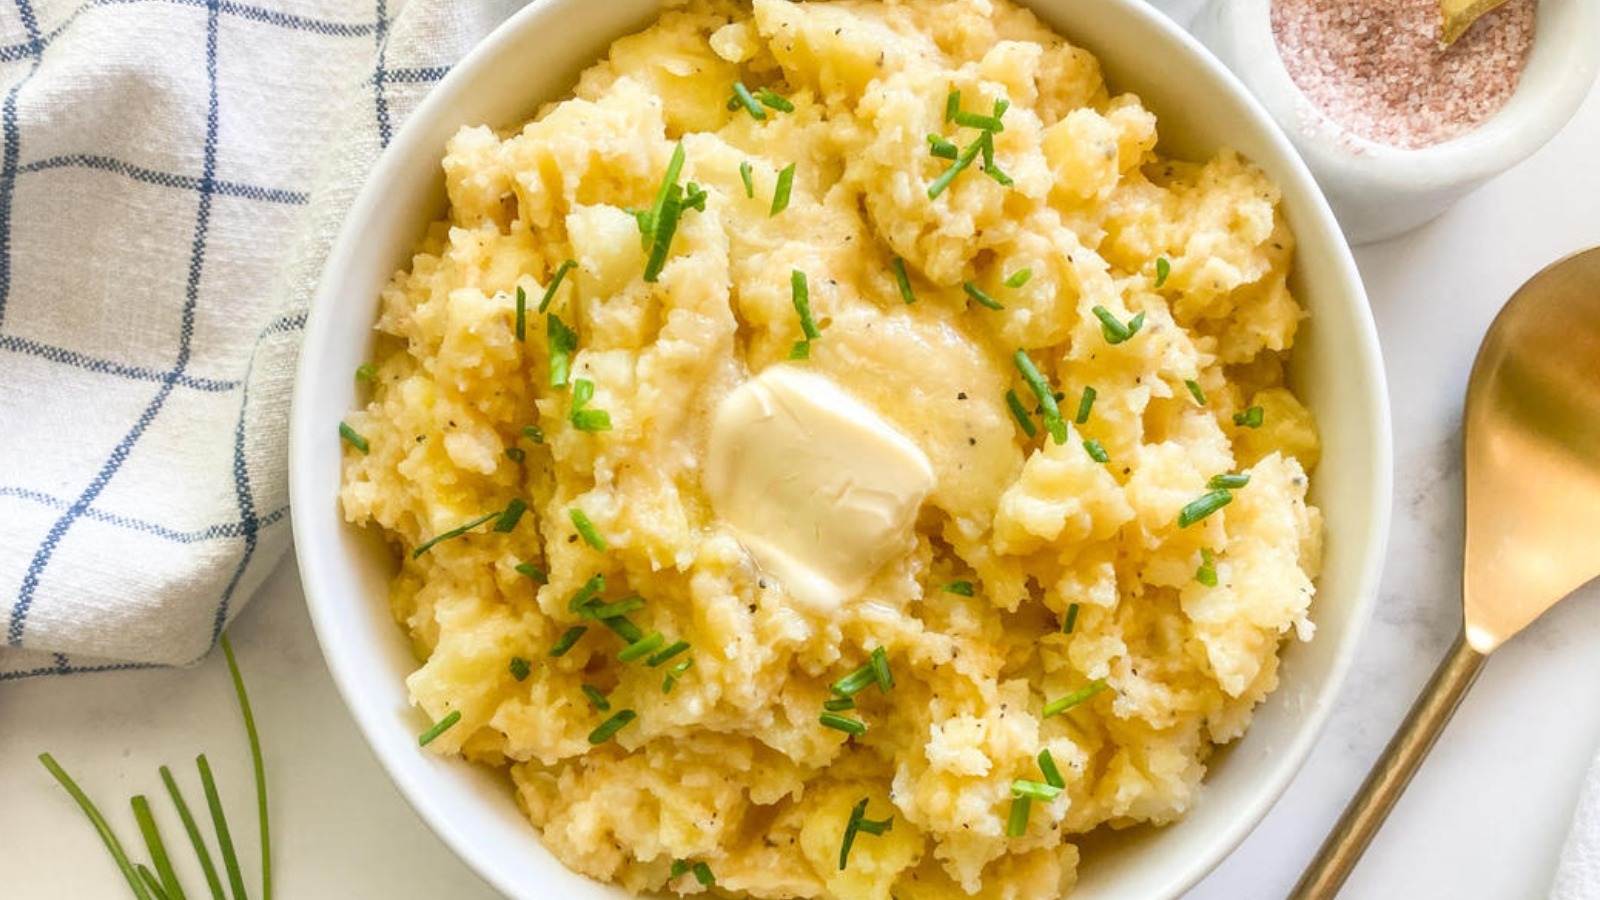 https://www.tastingtable.com/img/gallery/creamy-instant-pot-mashed-potatoes-recipe/l-intro-1659464805.jpg